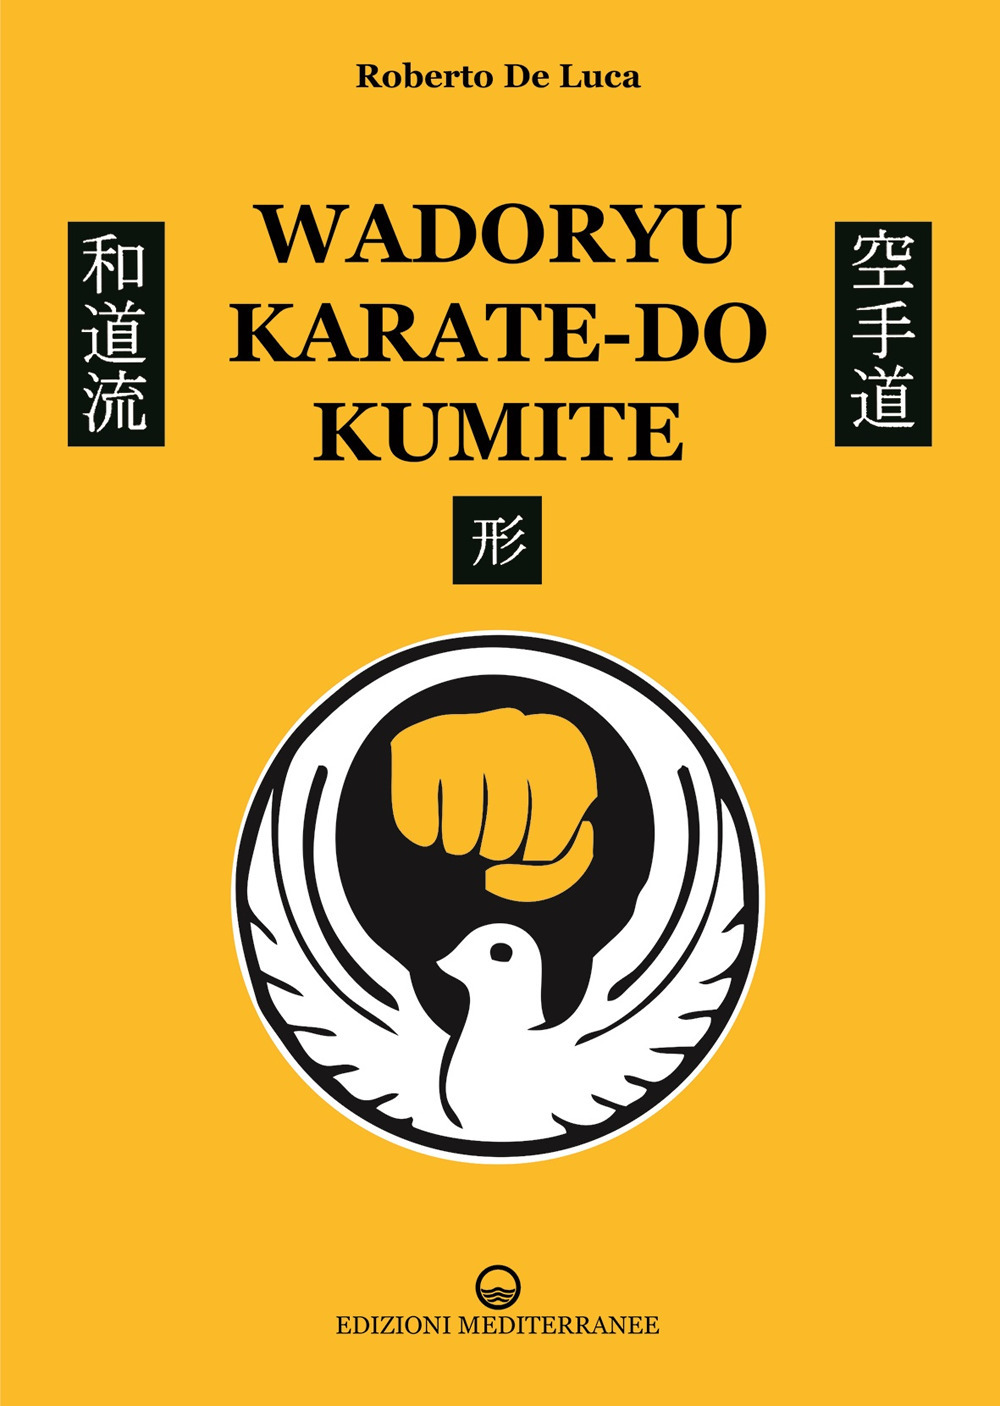 Image of Wadoryu karate-do kumite